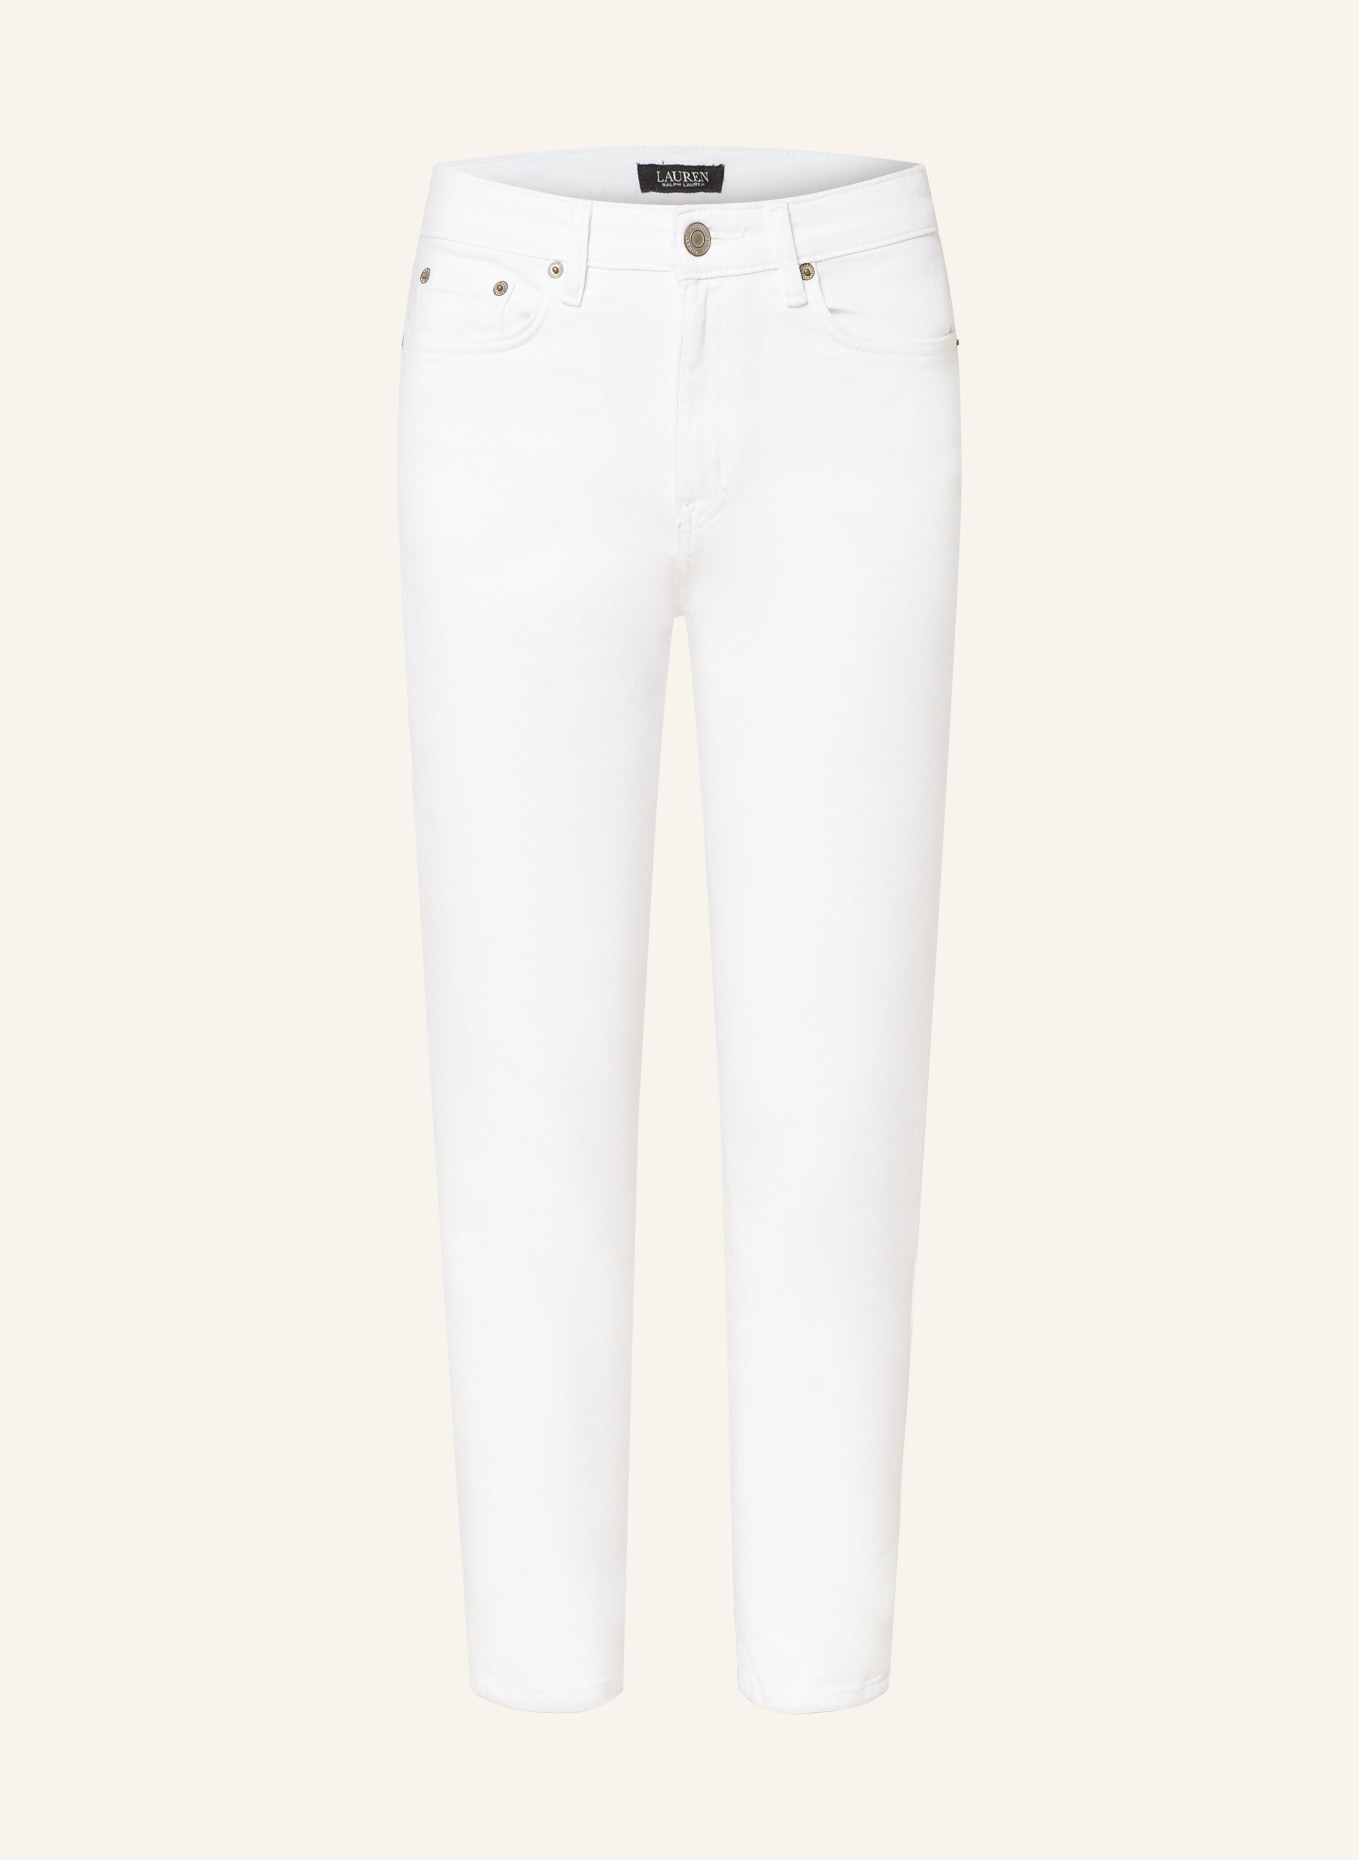 LAUREN RALPH LAUREN Skinny Jeans, Farbe: 001 WHITE WSH (Bild 1)